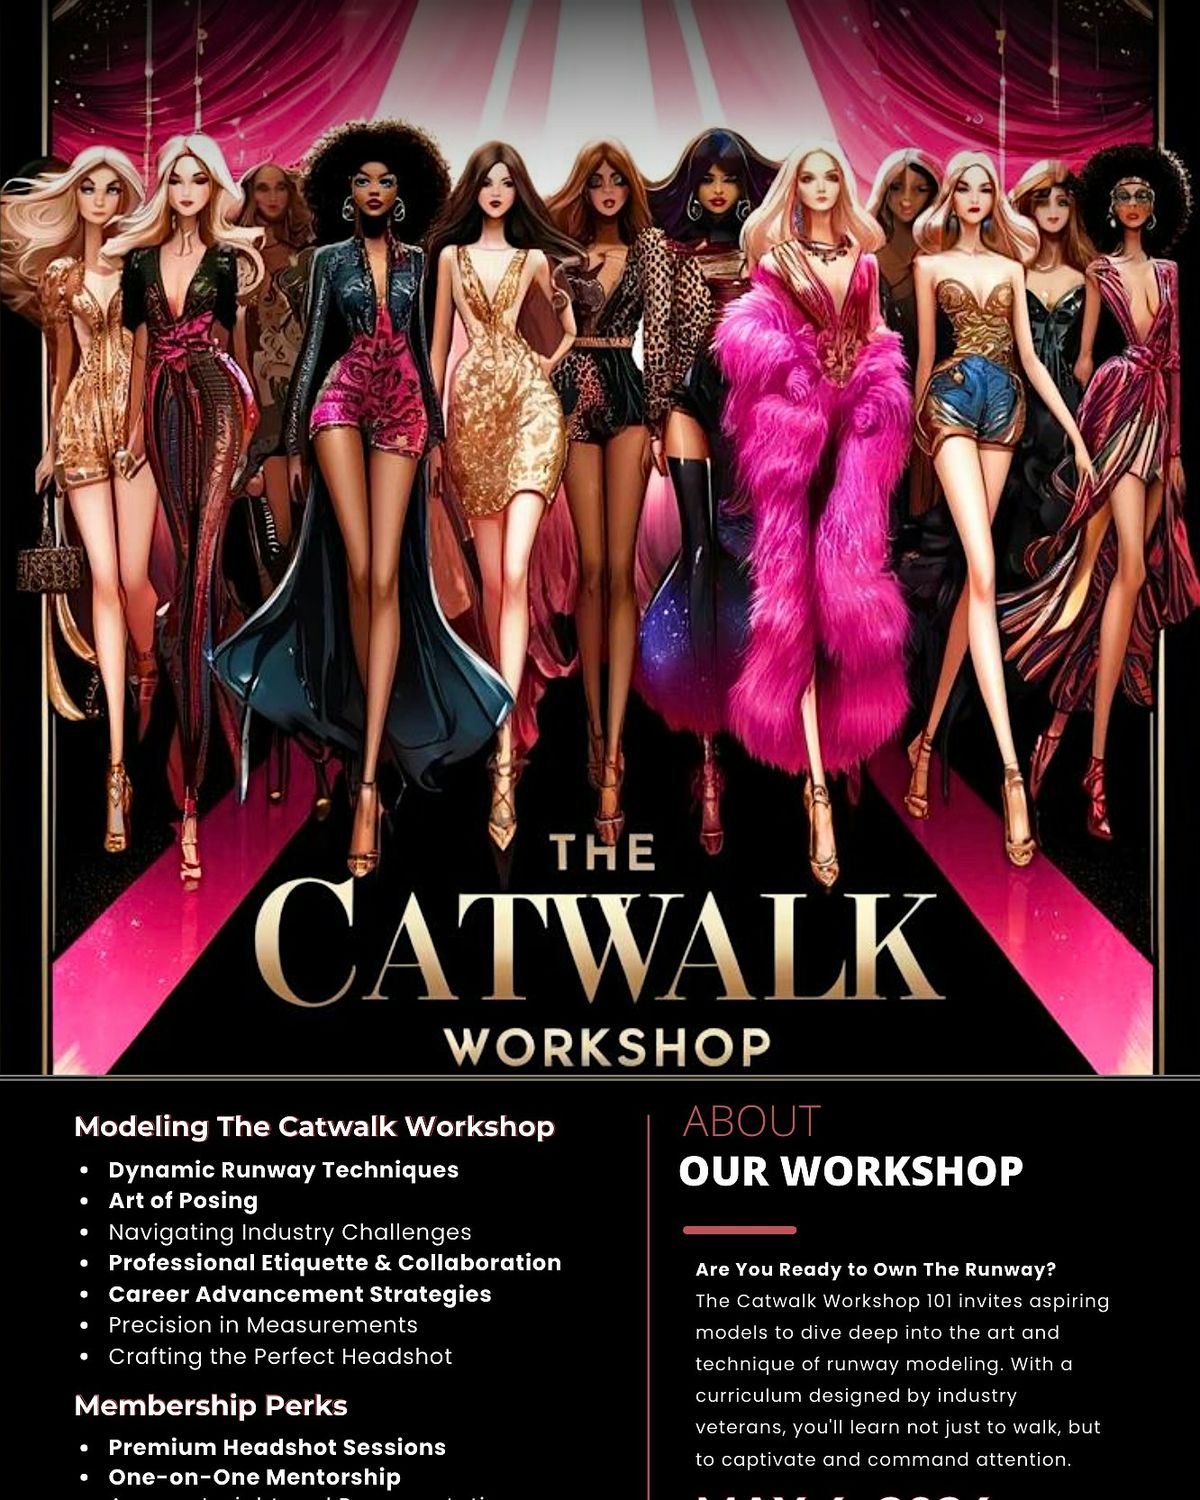 The Catwalk Workshop